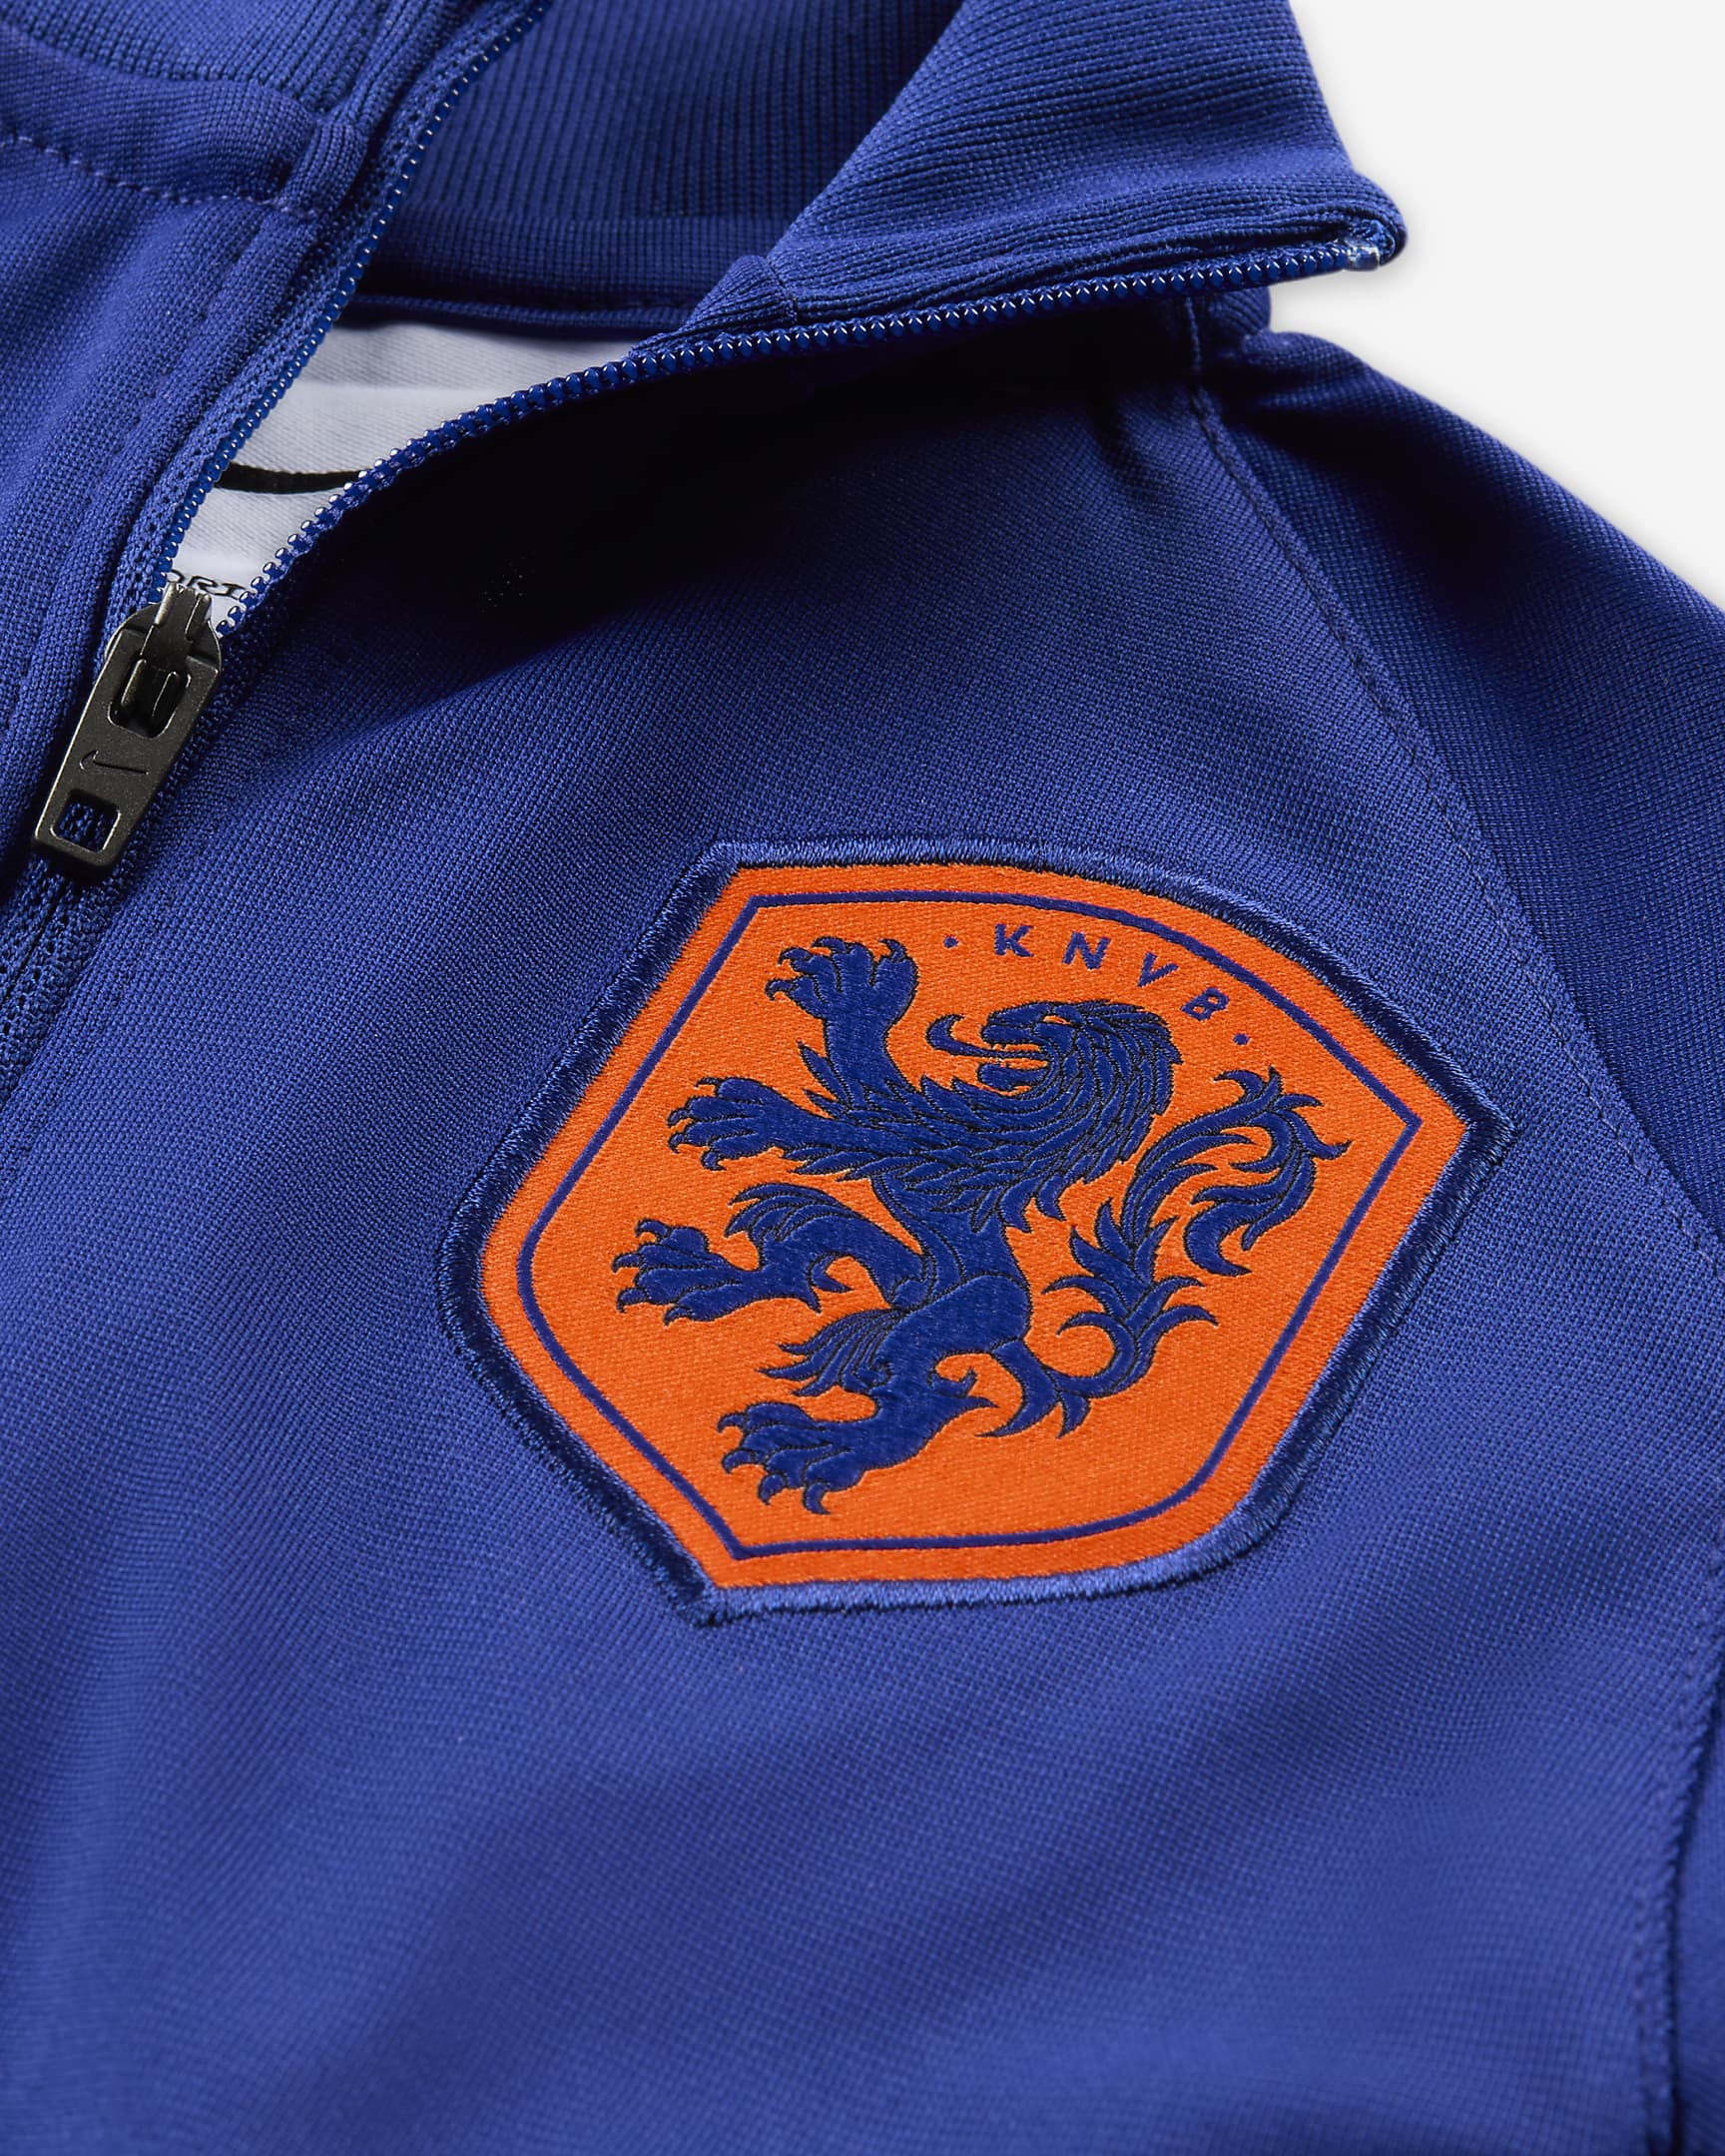 Netherlands Strike Baby/Toddler Nike Dri-FIT Football Knit Tracksuit ...